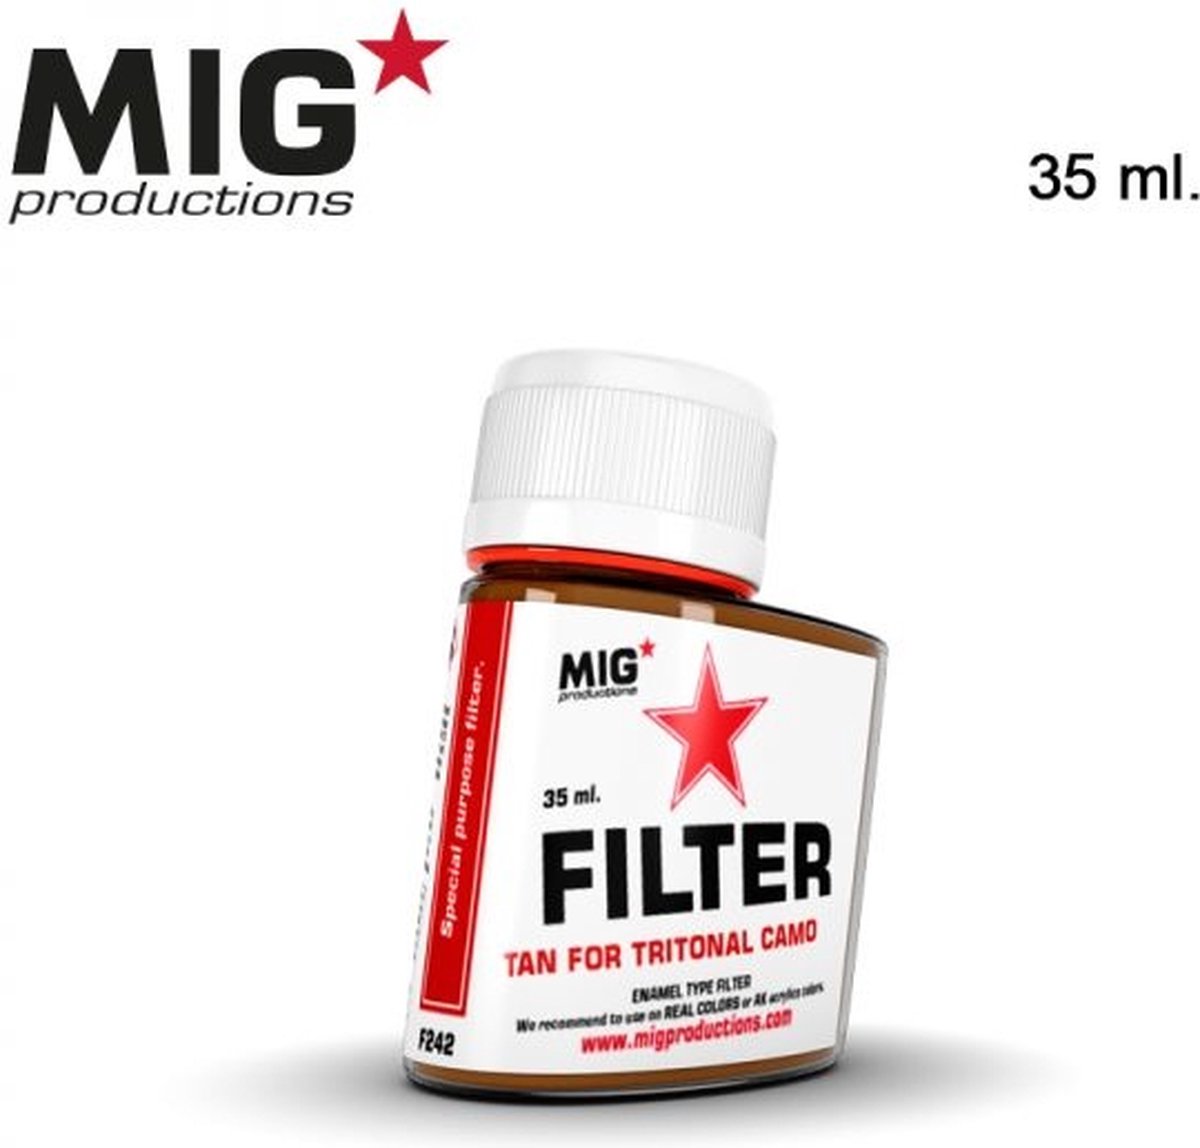 MIG Productions - F242 - Tan Filter for Tritonal Camo - 35ml -